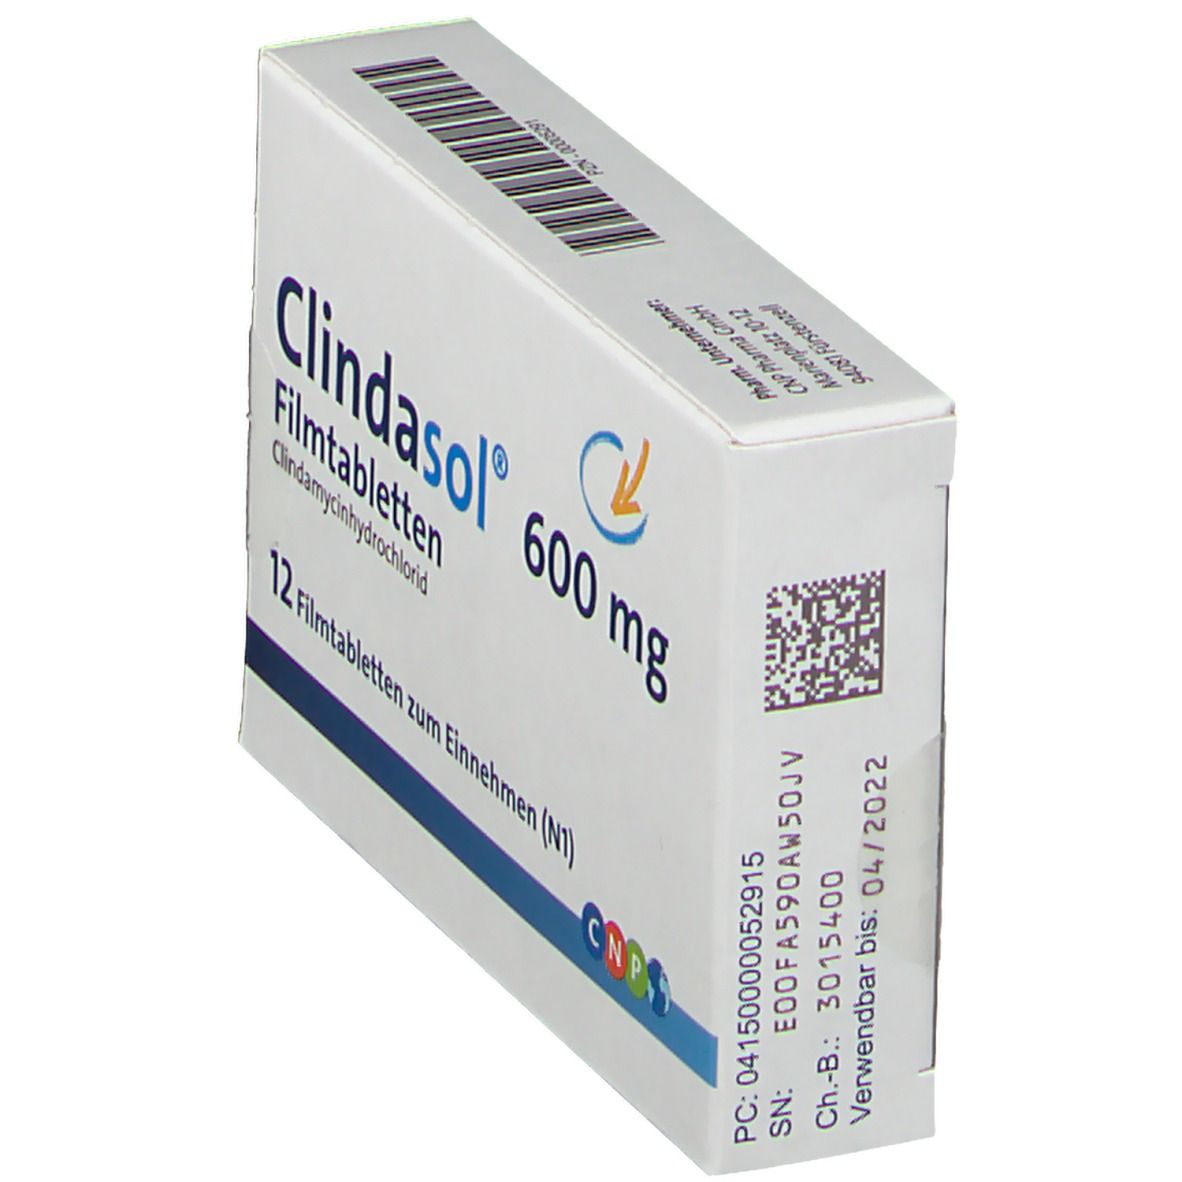 Clindasol® 600 mg